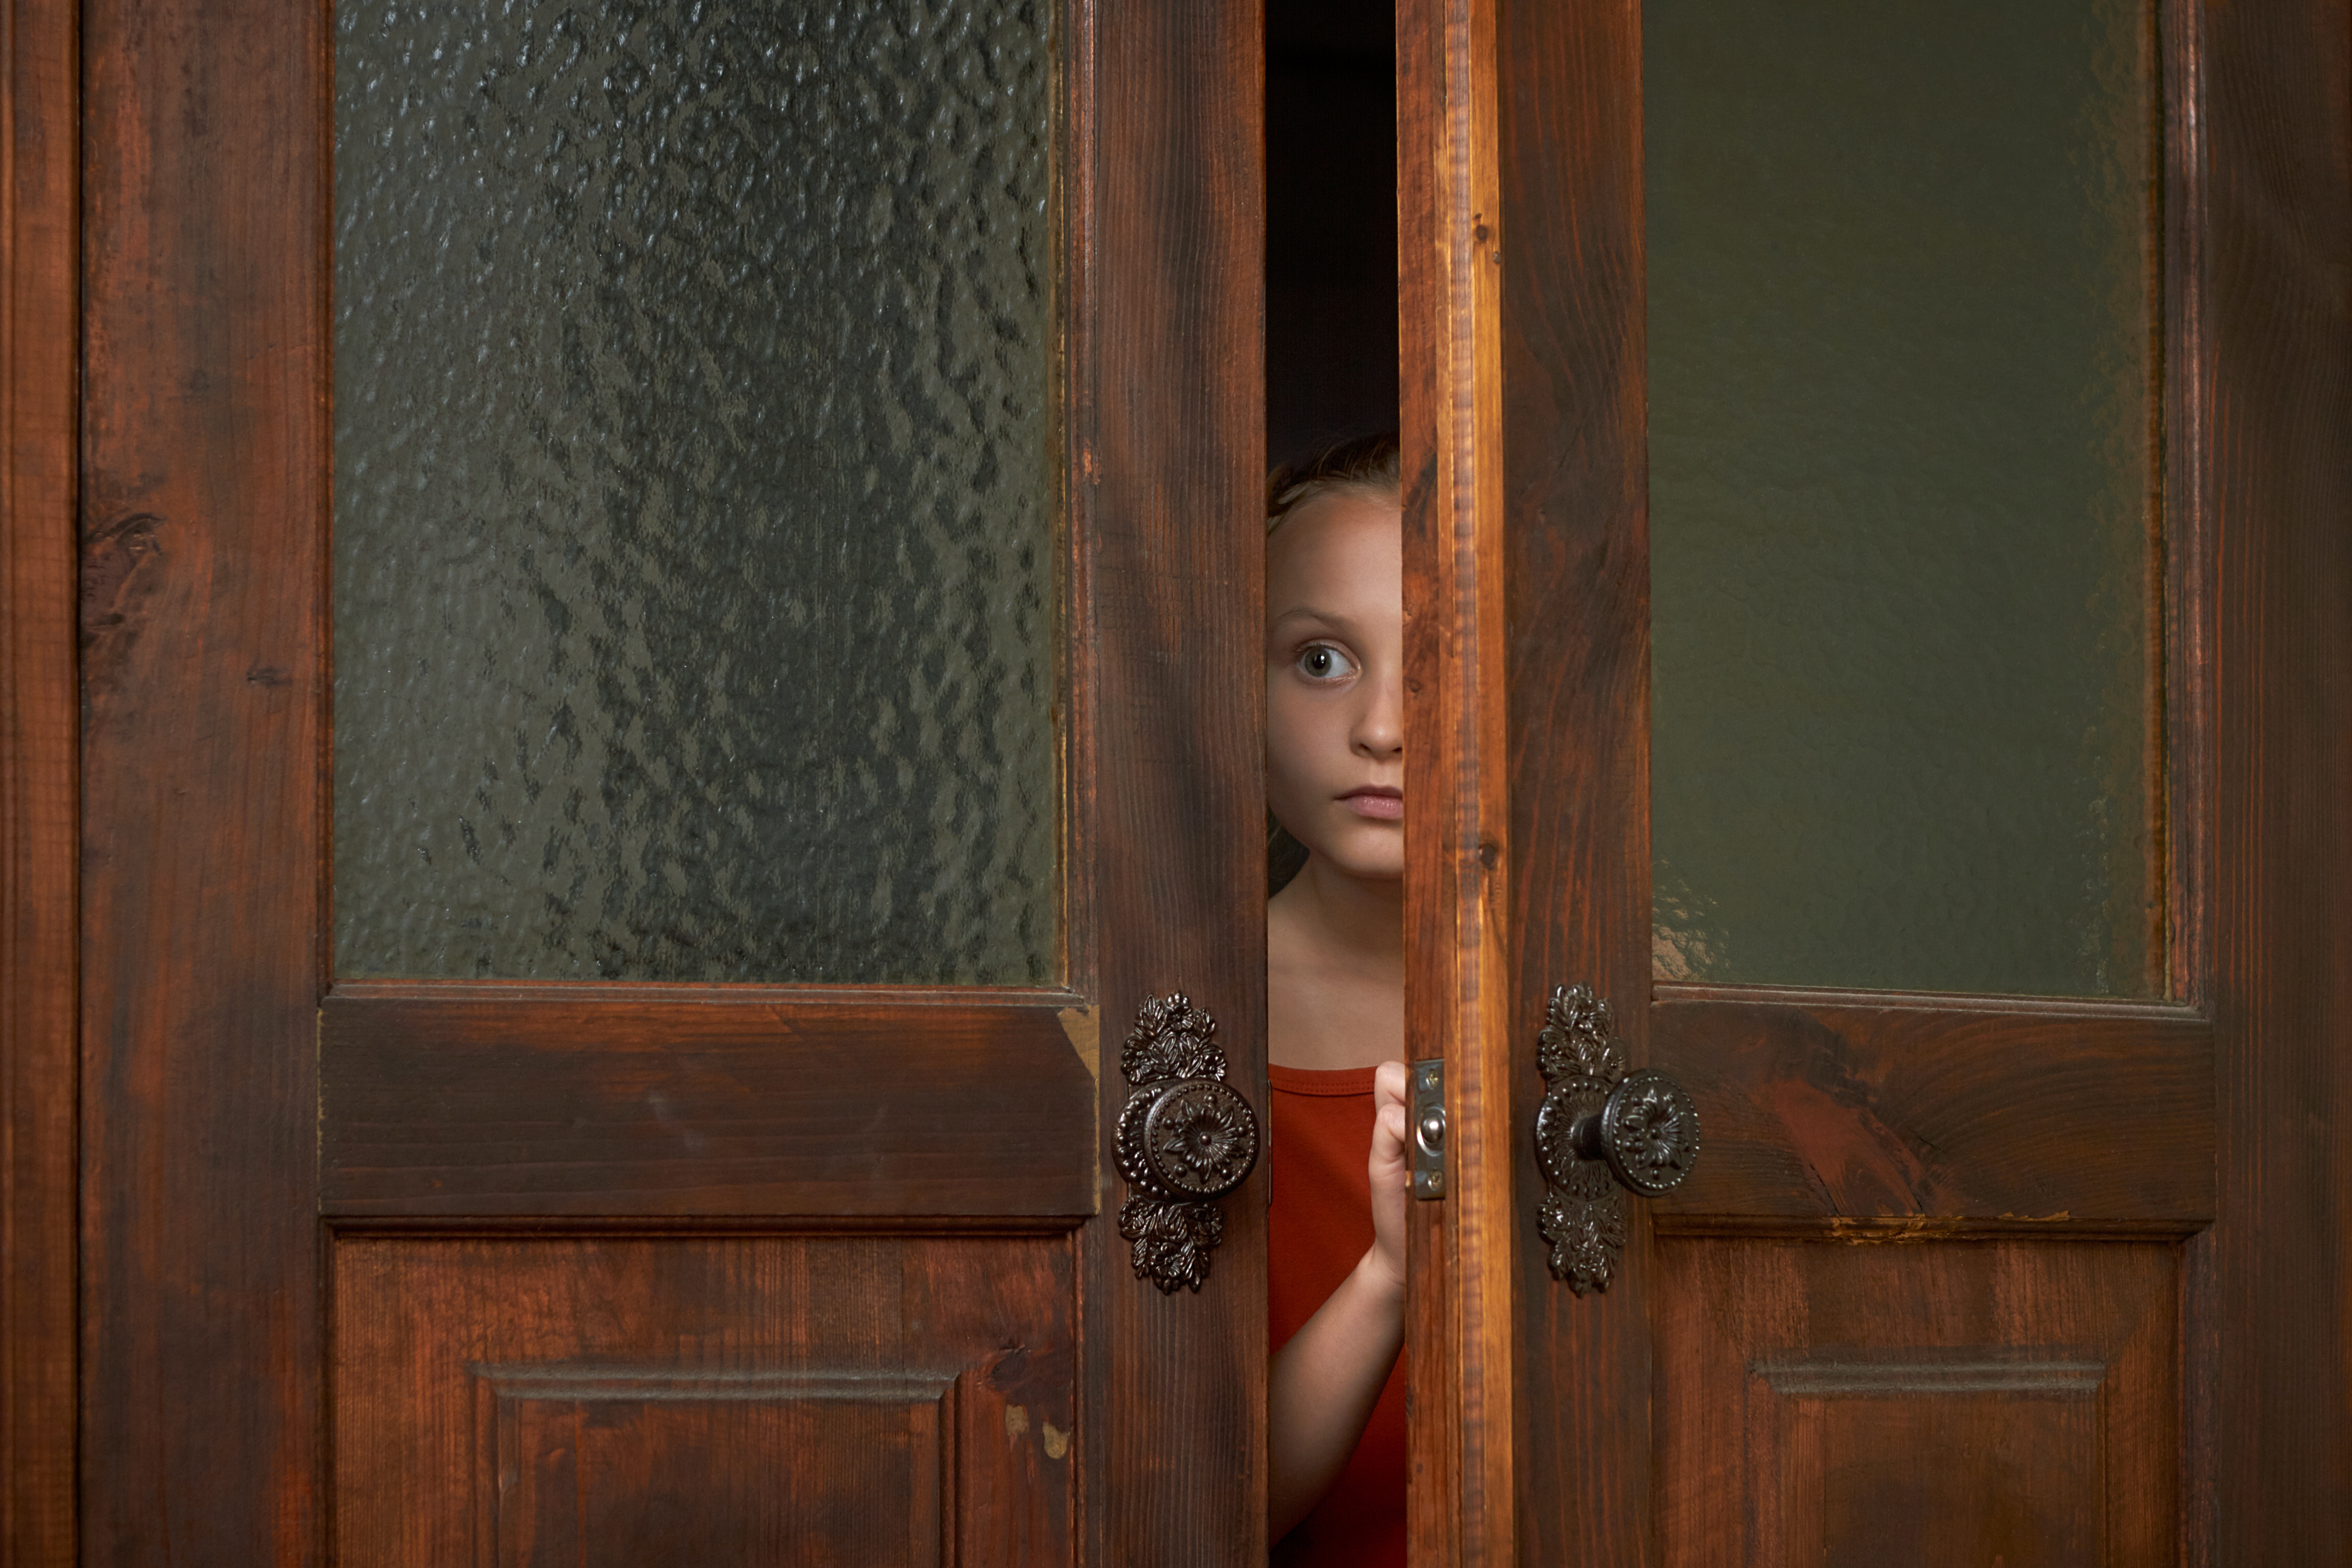 A little scared girl is looking through the door slit | Source: Shutterstock.com